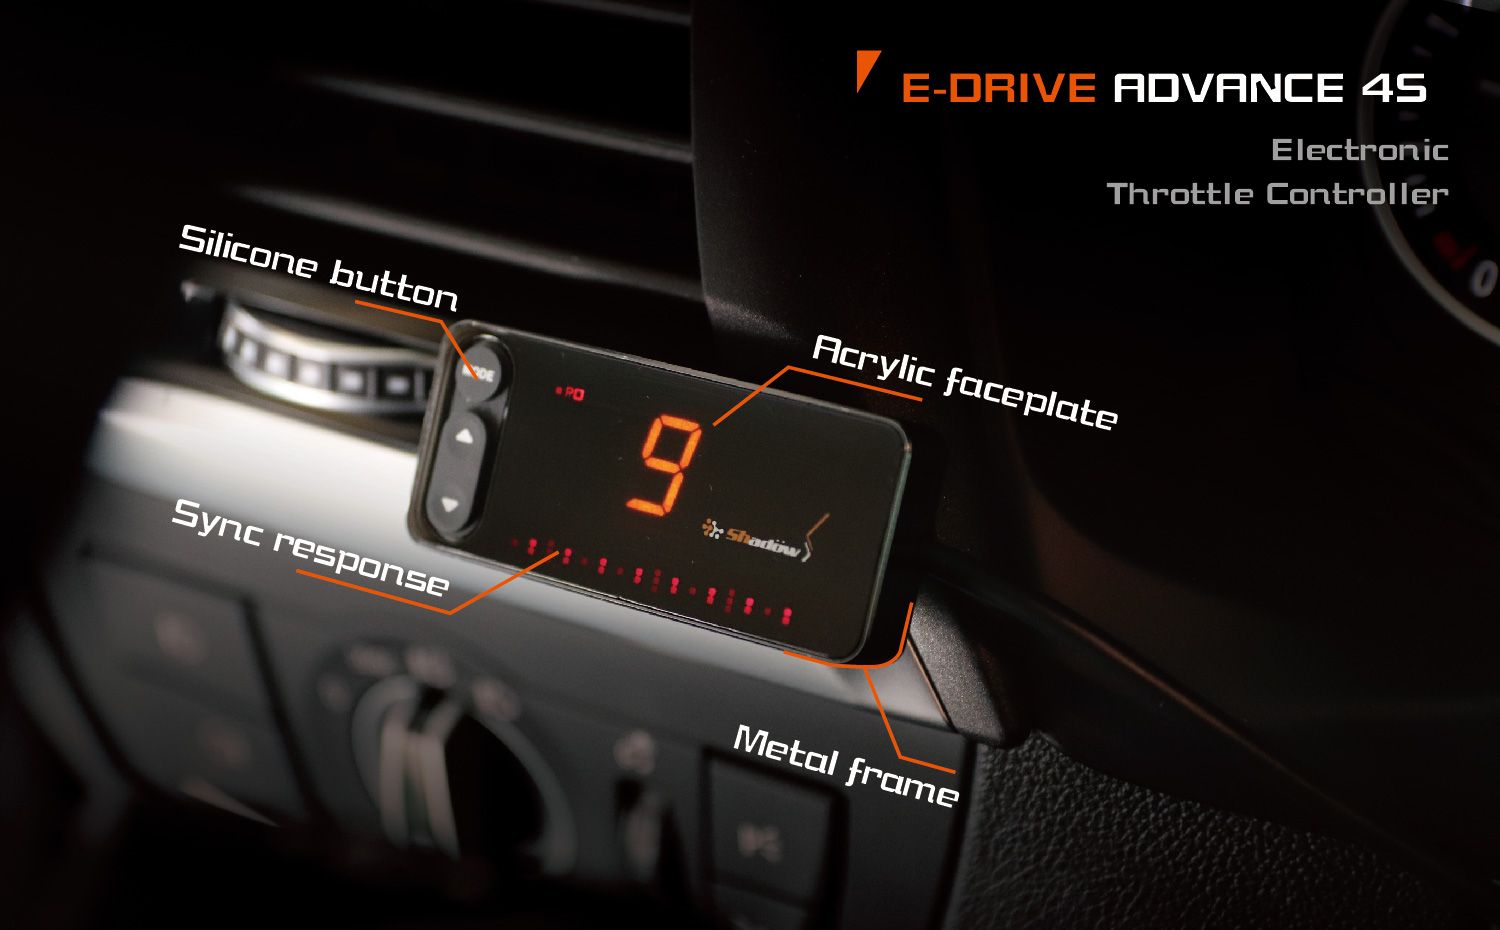 E-DRIVE ADVANCE 4S has Metal frame